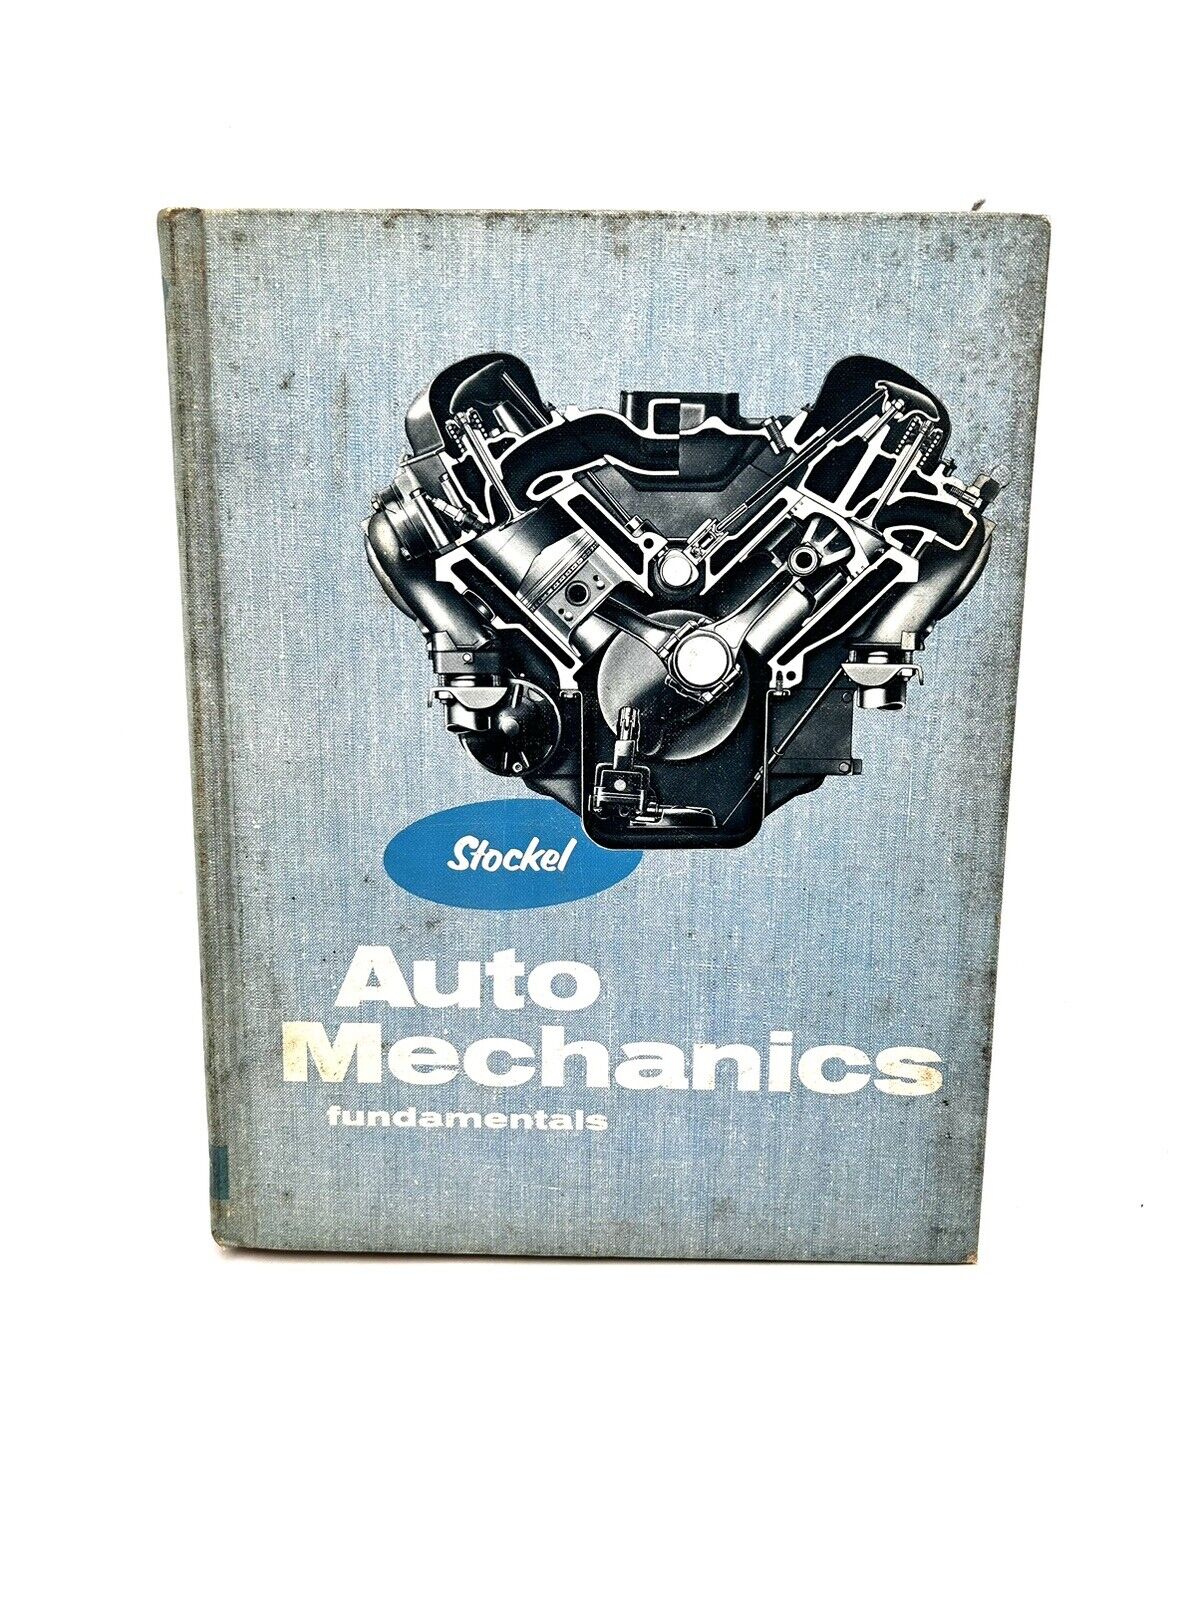 AUTO MECHANICS FUNDAMENTALS, by Stockel, 1963 HC Car Mechanics Textbook How Why